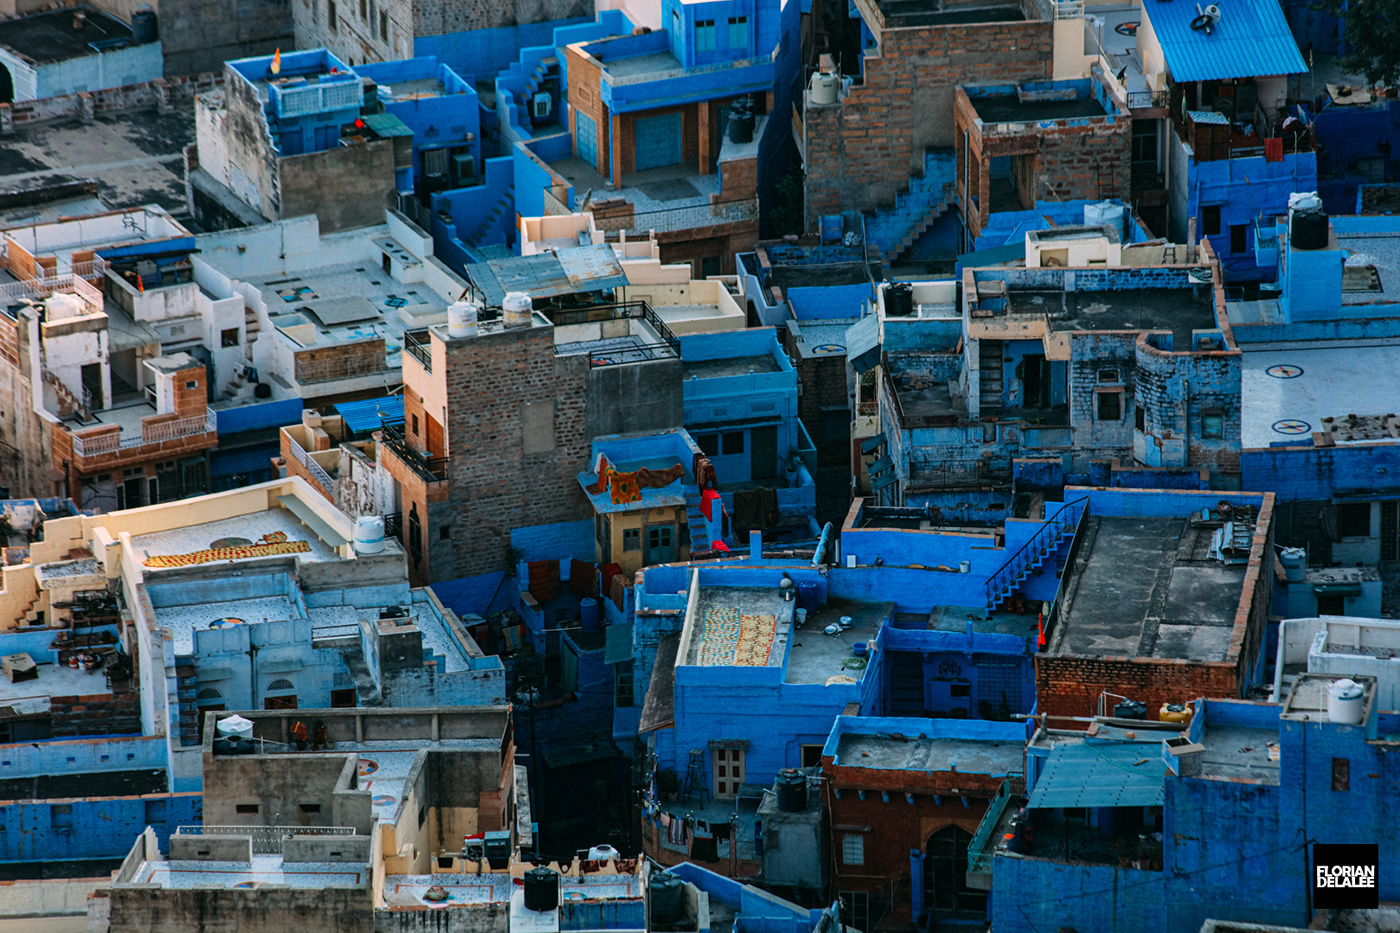 blue city India Rajasthan jodhpur old city mehrangarh